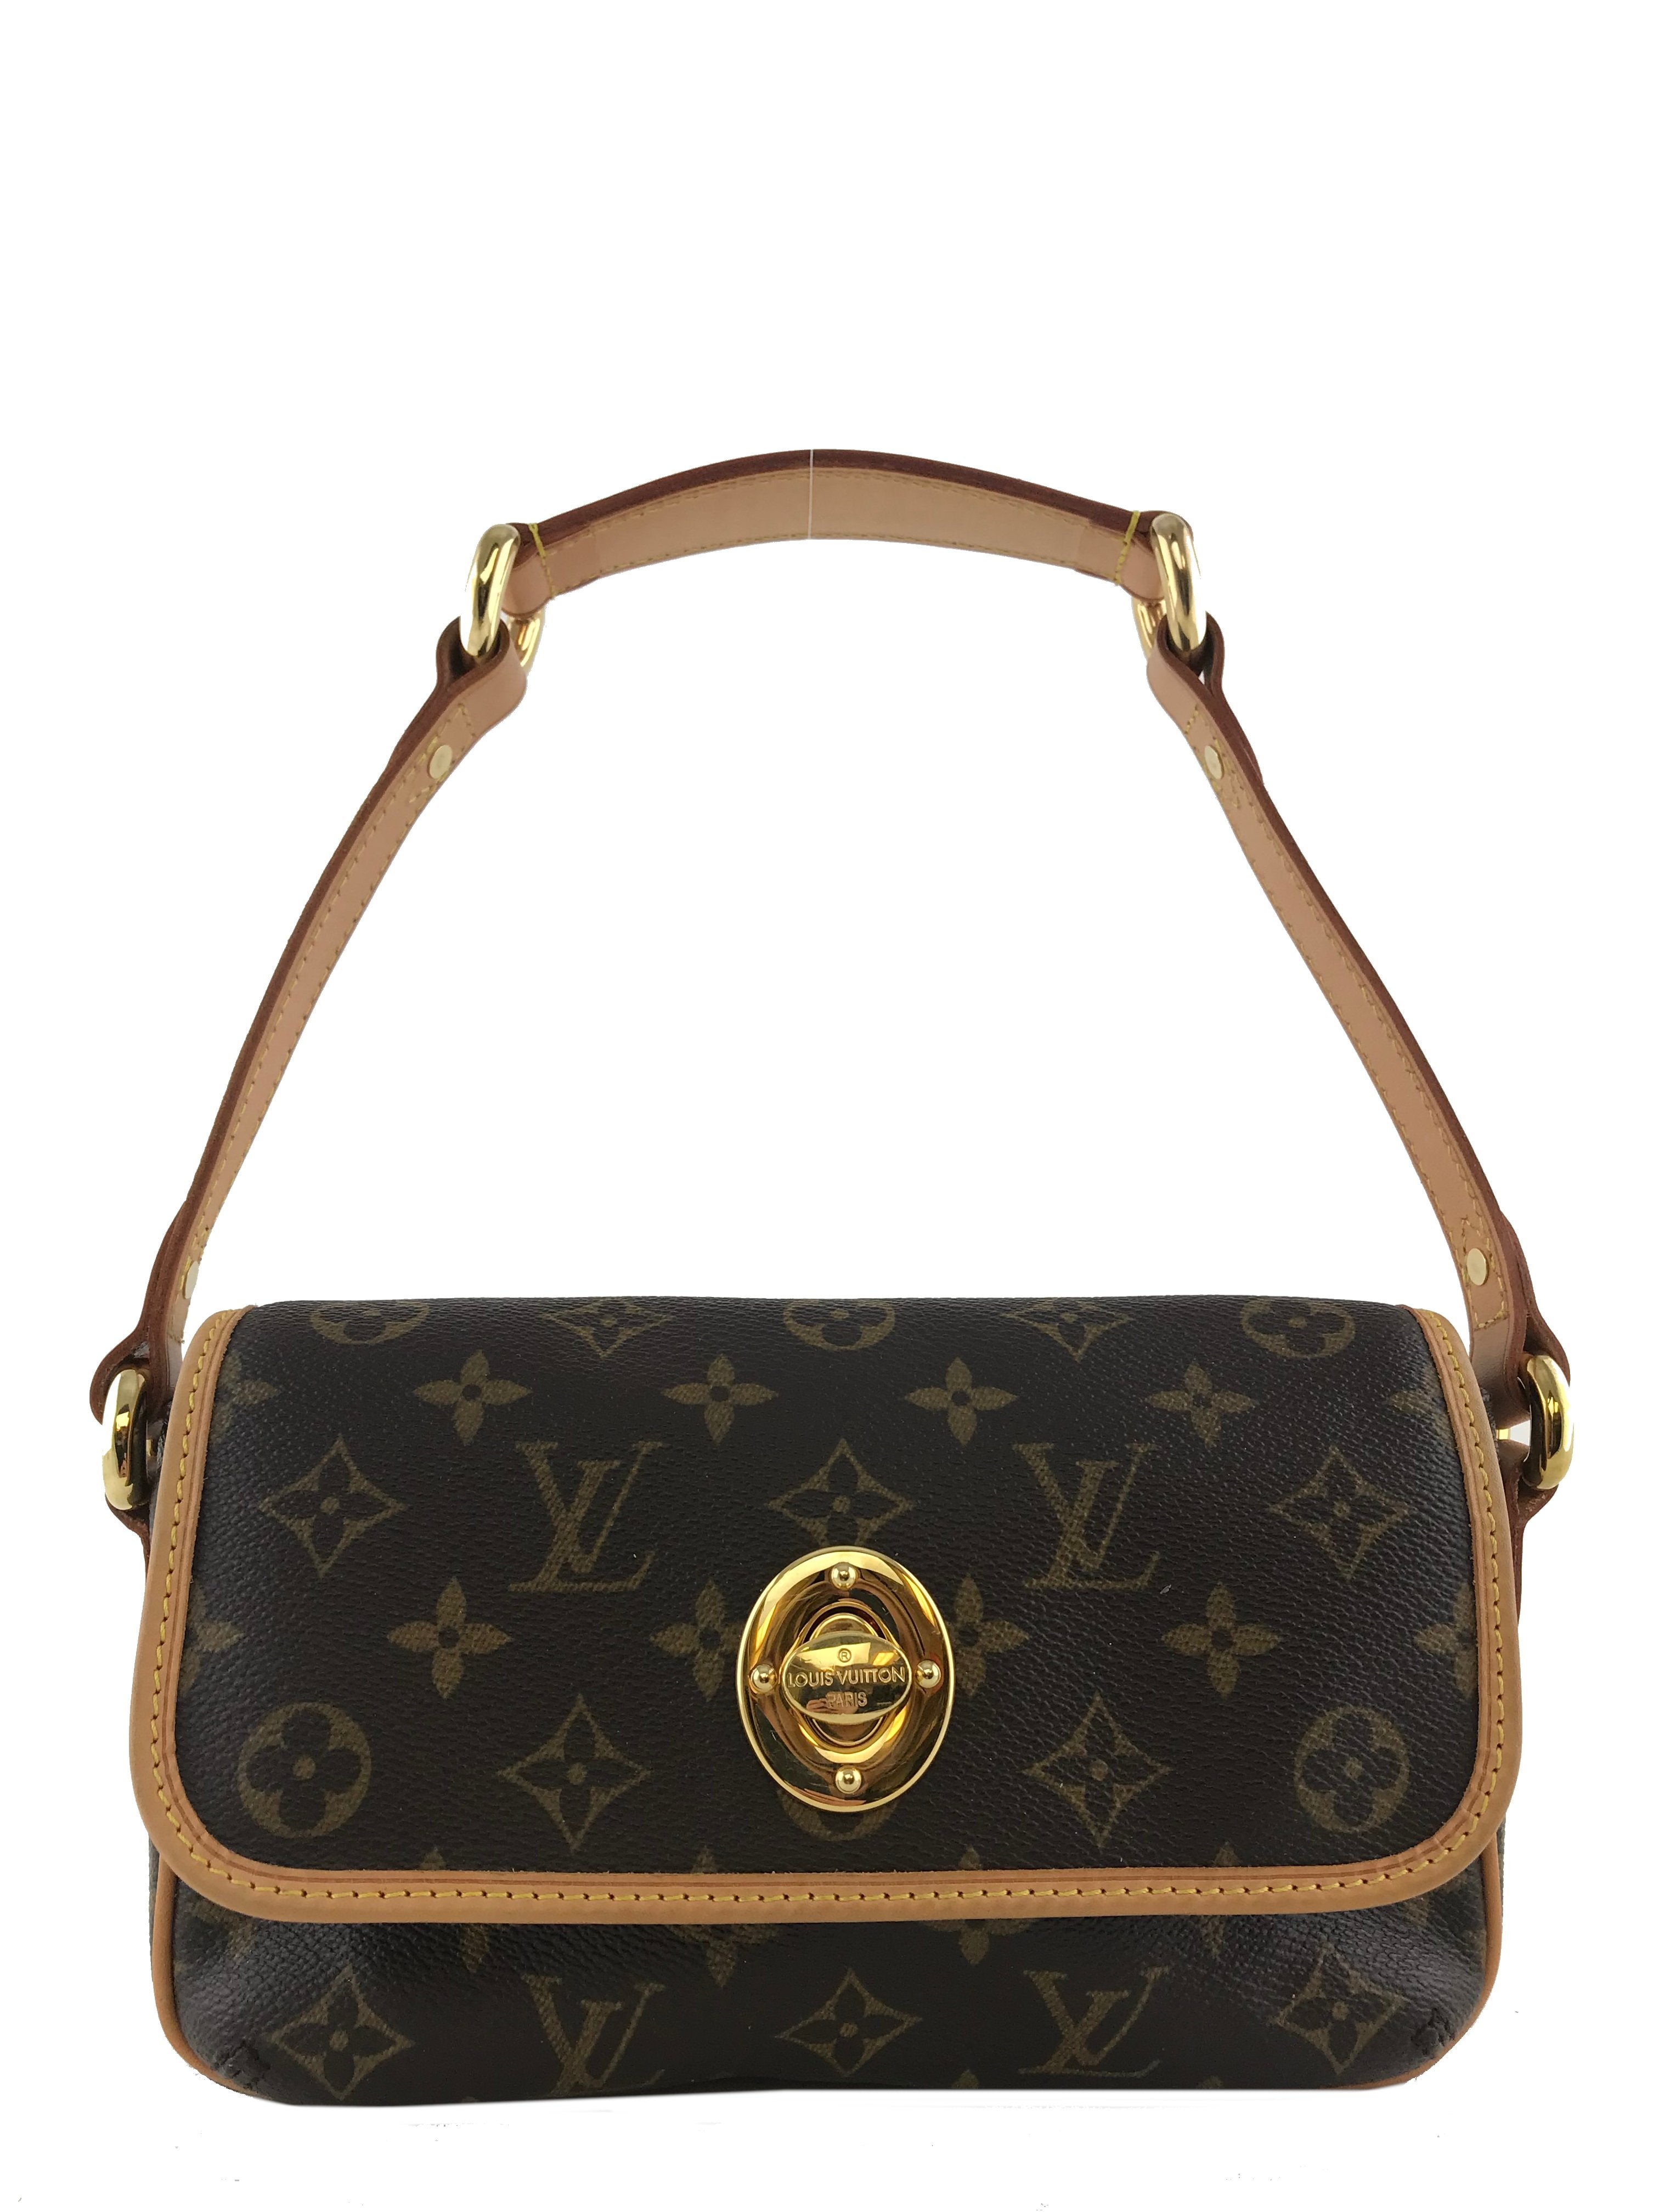 Classy and Elegant Authentic Louis Vuitton Monogram Bucket PM